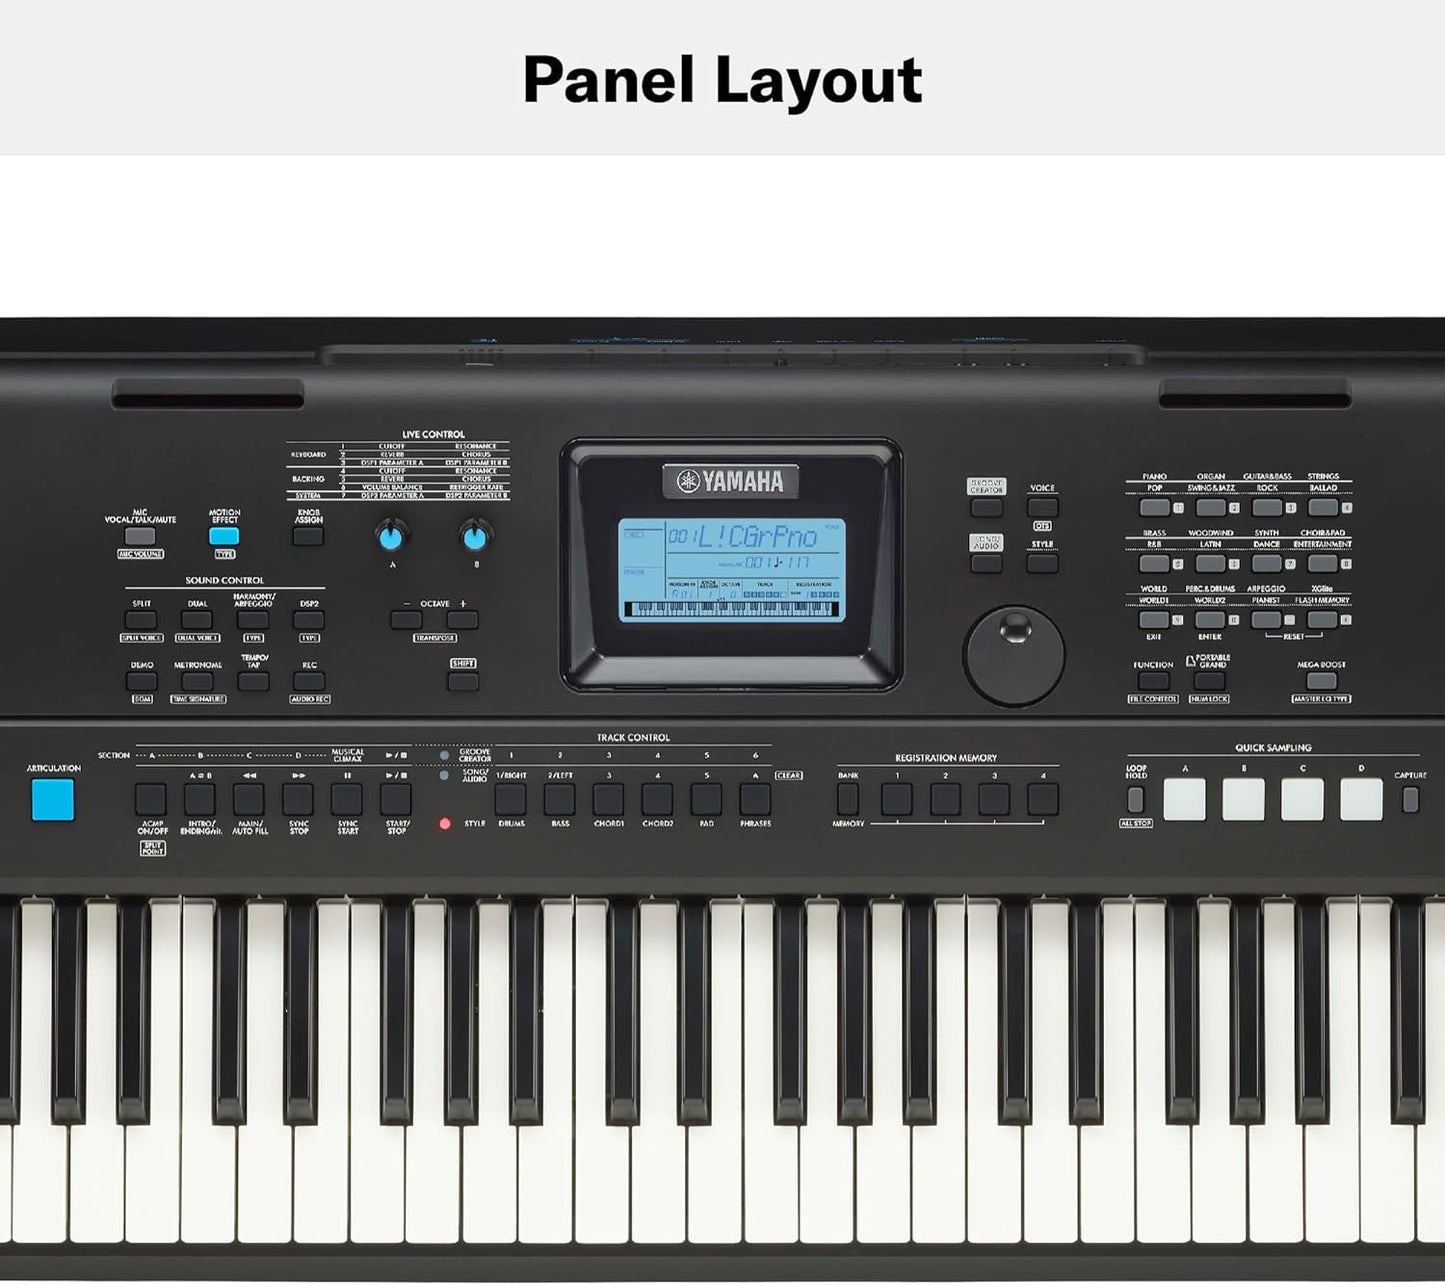 Yamaha PSREW425 76 Note Digital Keyboard